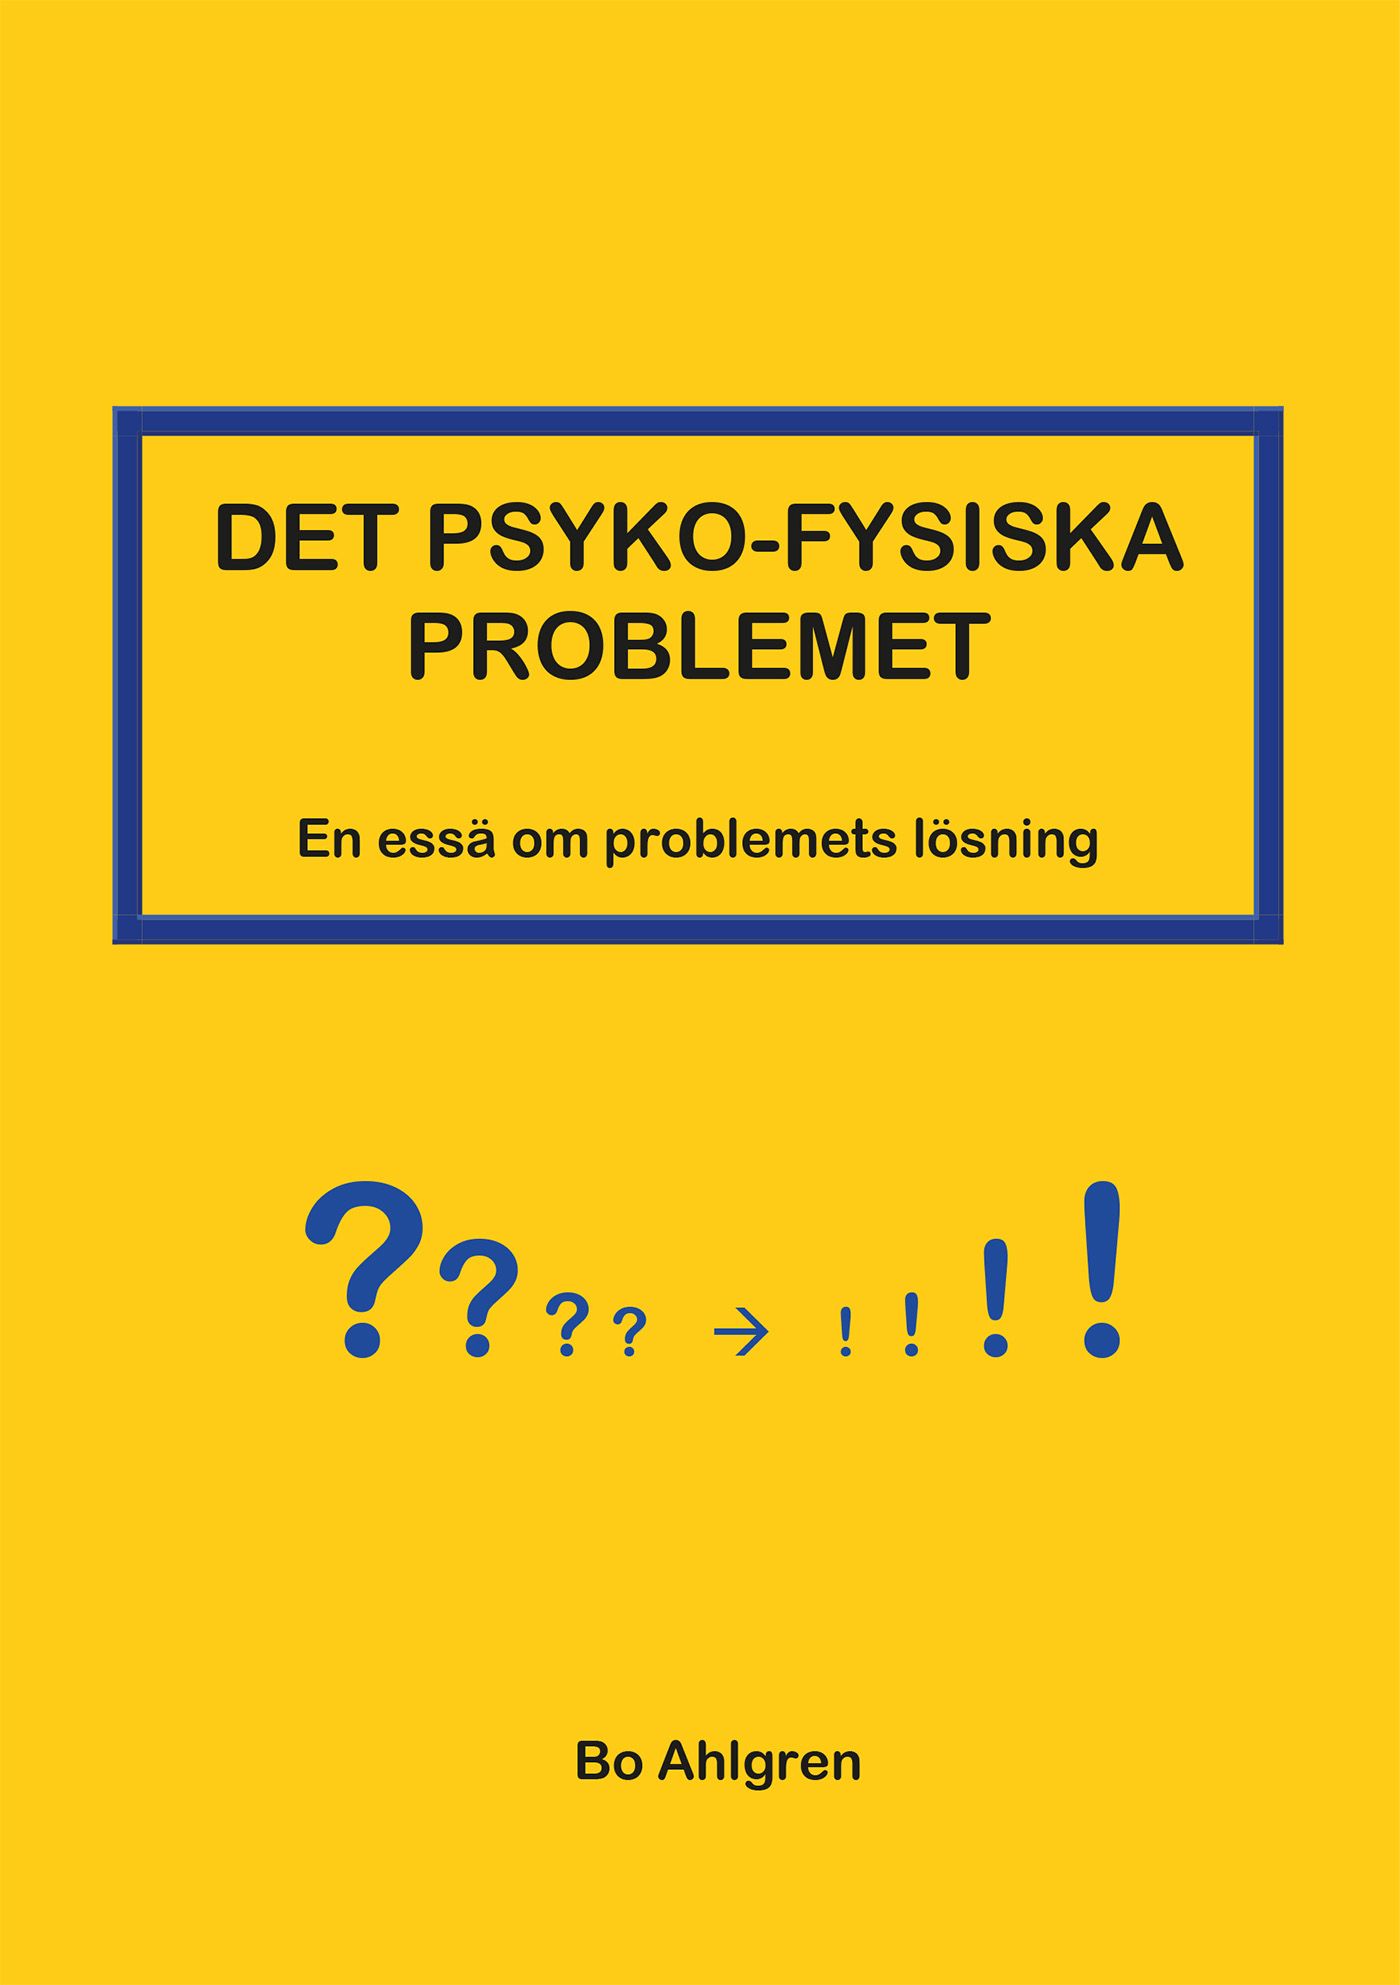 DET PSYKO-FYSISKA PROBLEMET, e-bog af Bo Ahlgren